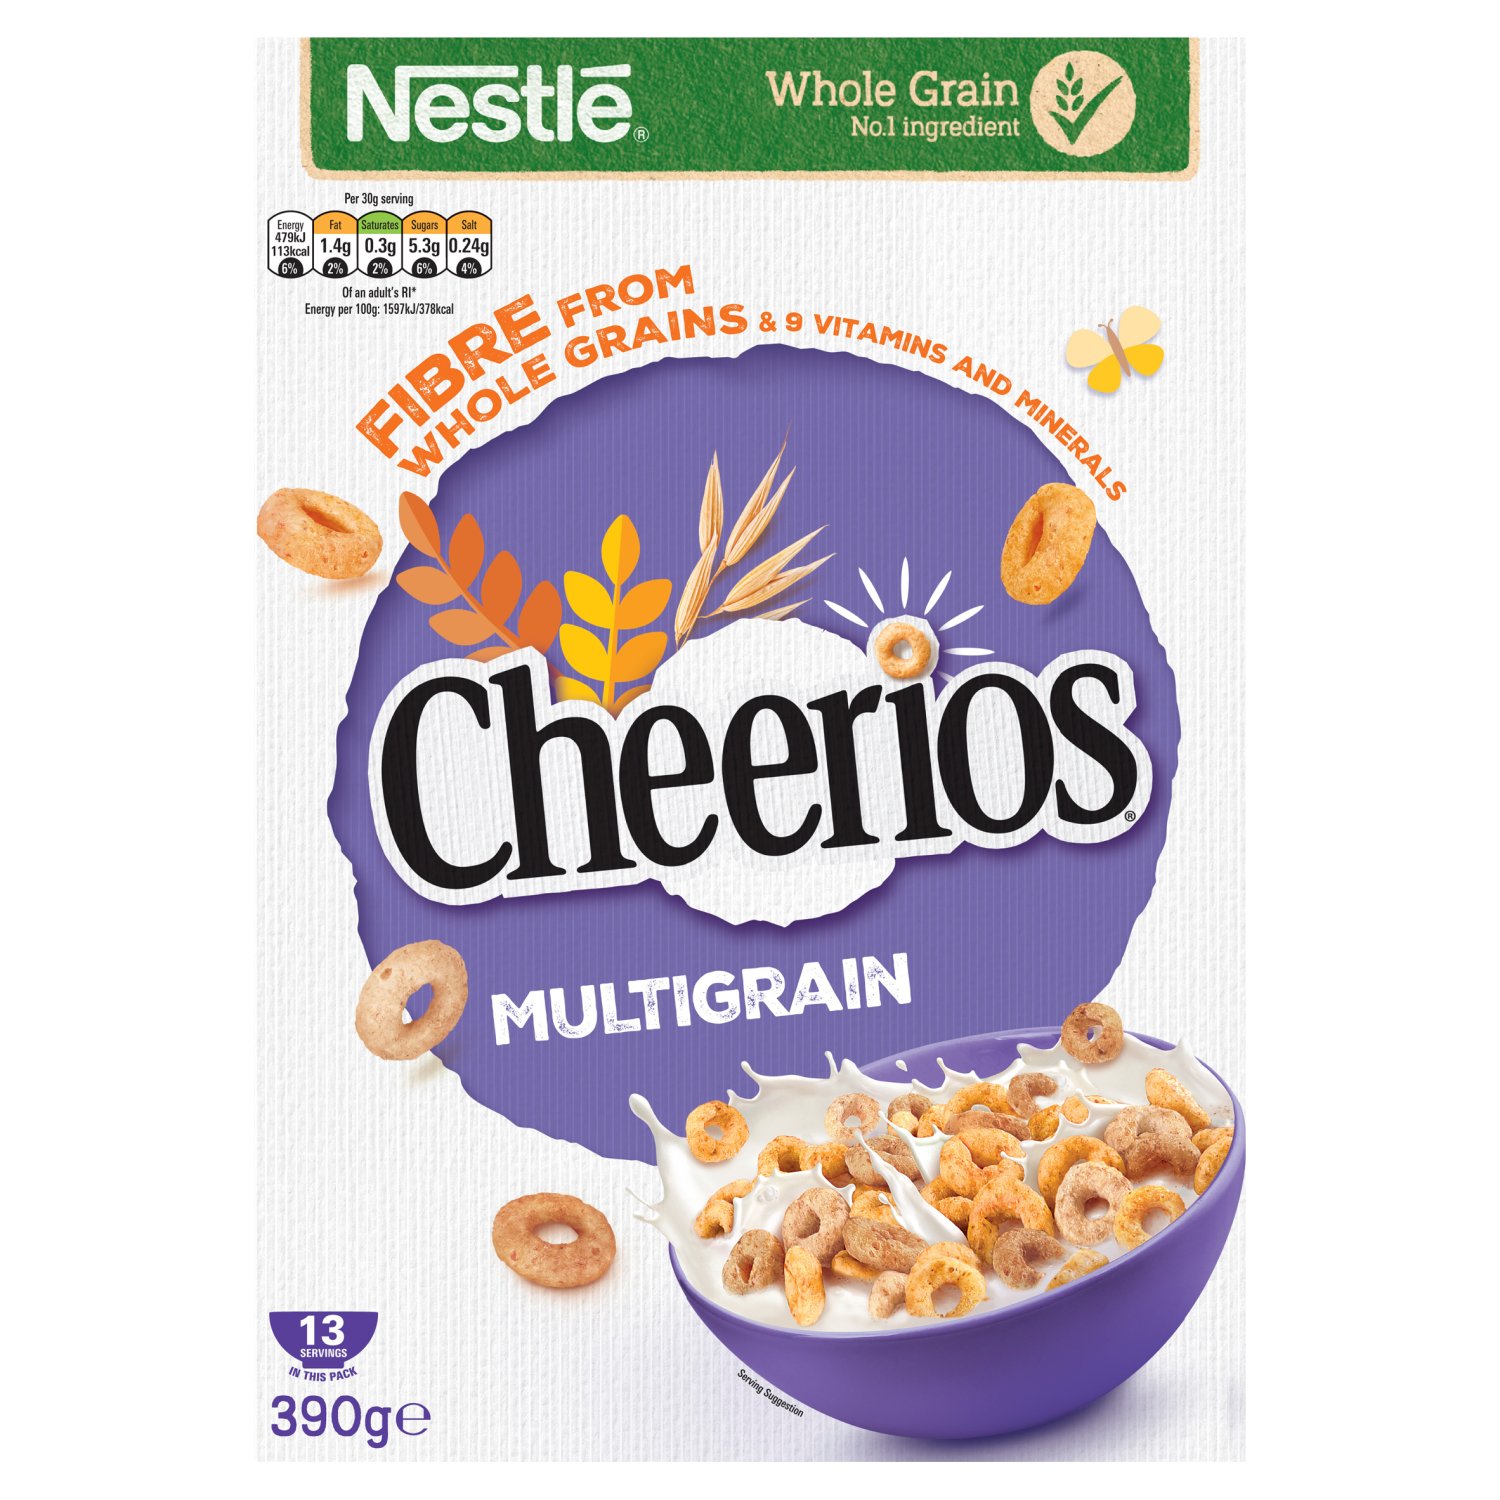 Nestlé Cheerios Cereal (390 g)